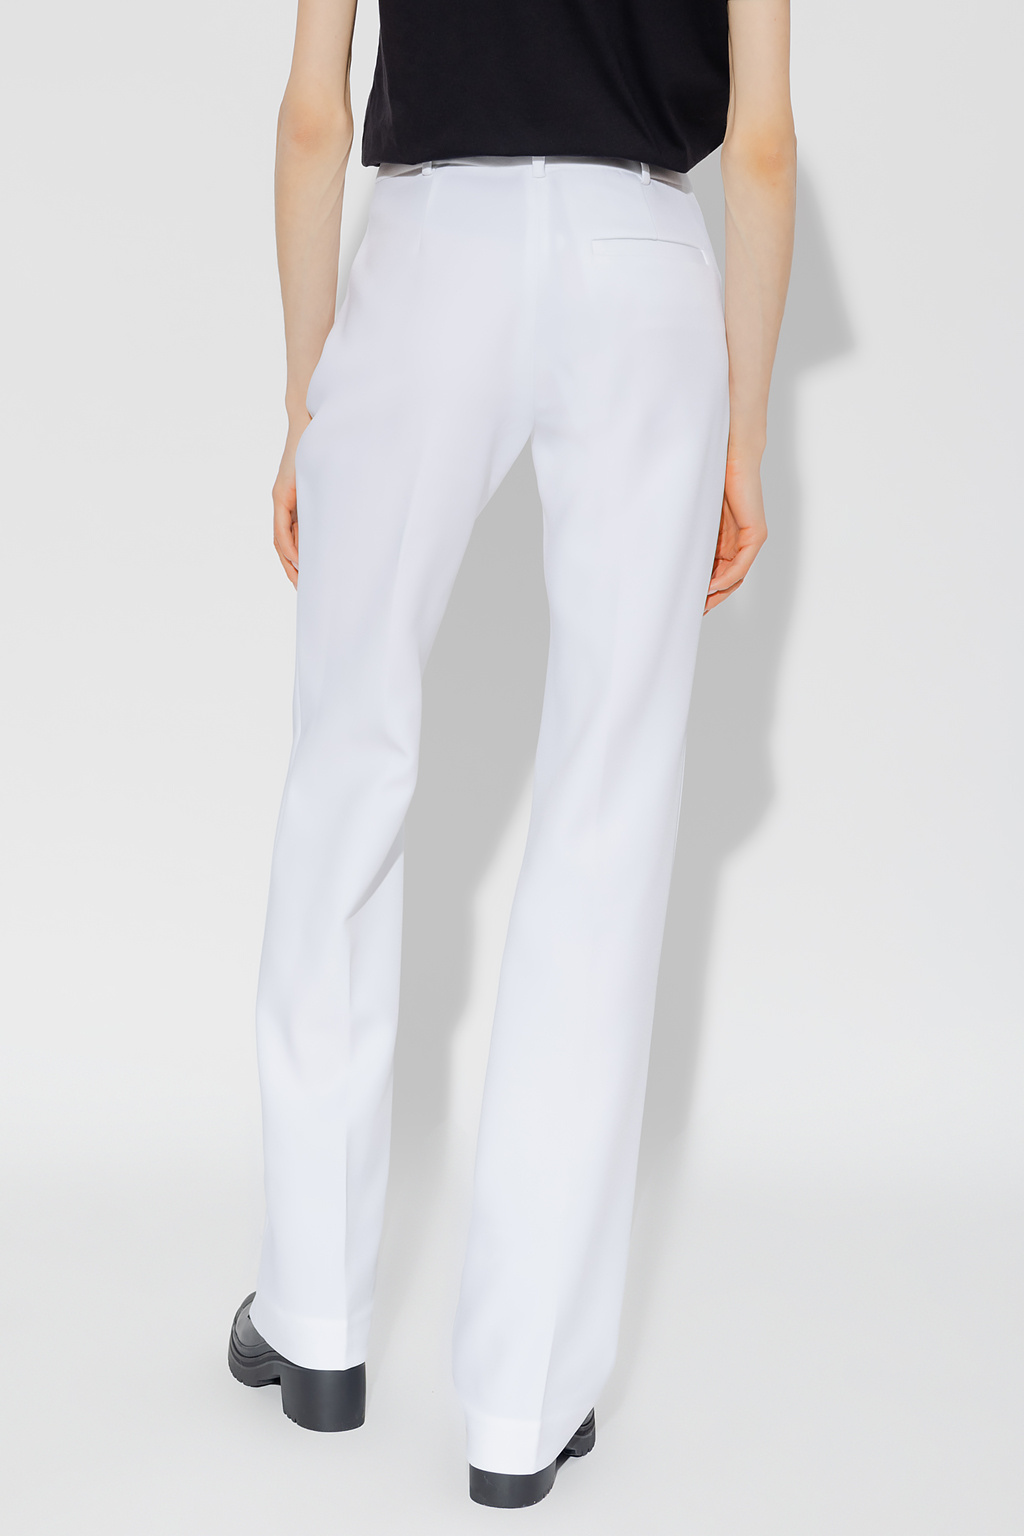 Love Moschino raindrop-print dress Pleat-front trousers